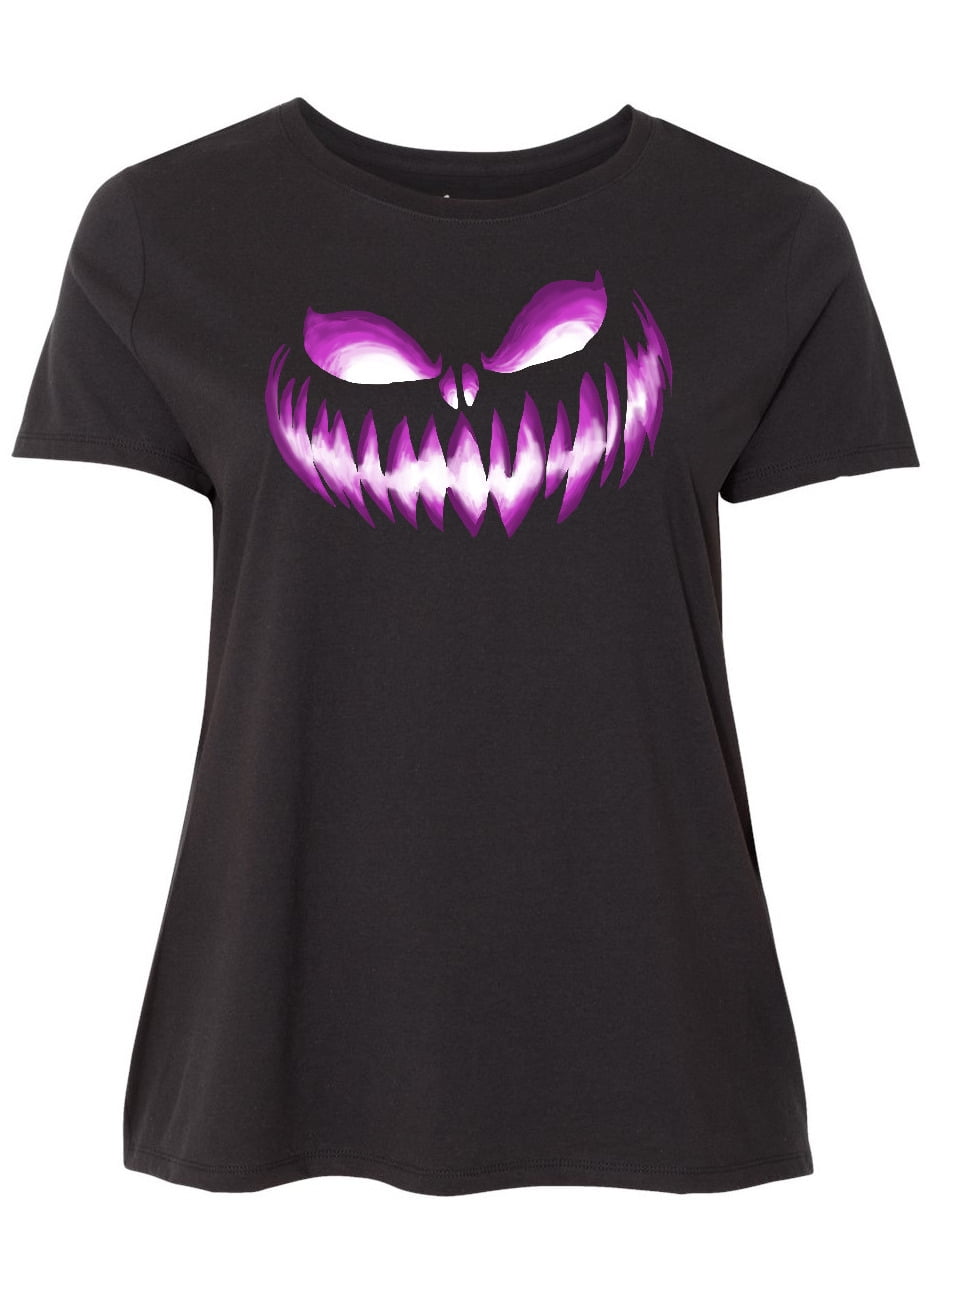 inktastic Wide Grinning Pumpkin Face in Grape Purple Glow Toddler T-Shirt 